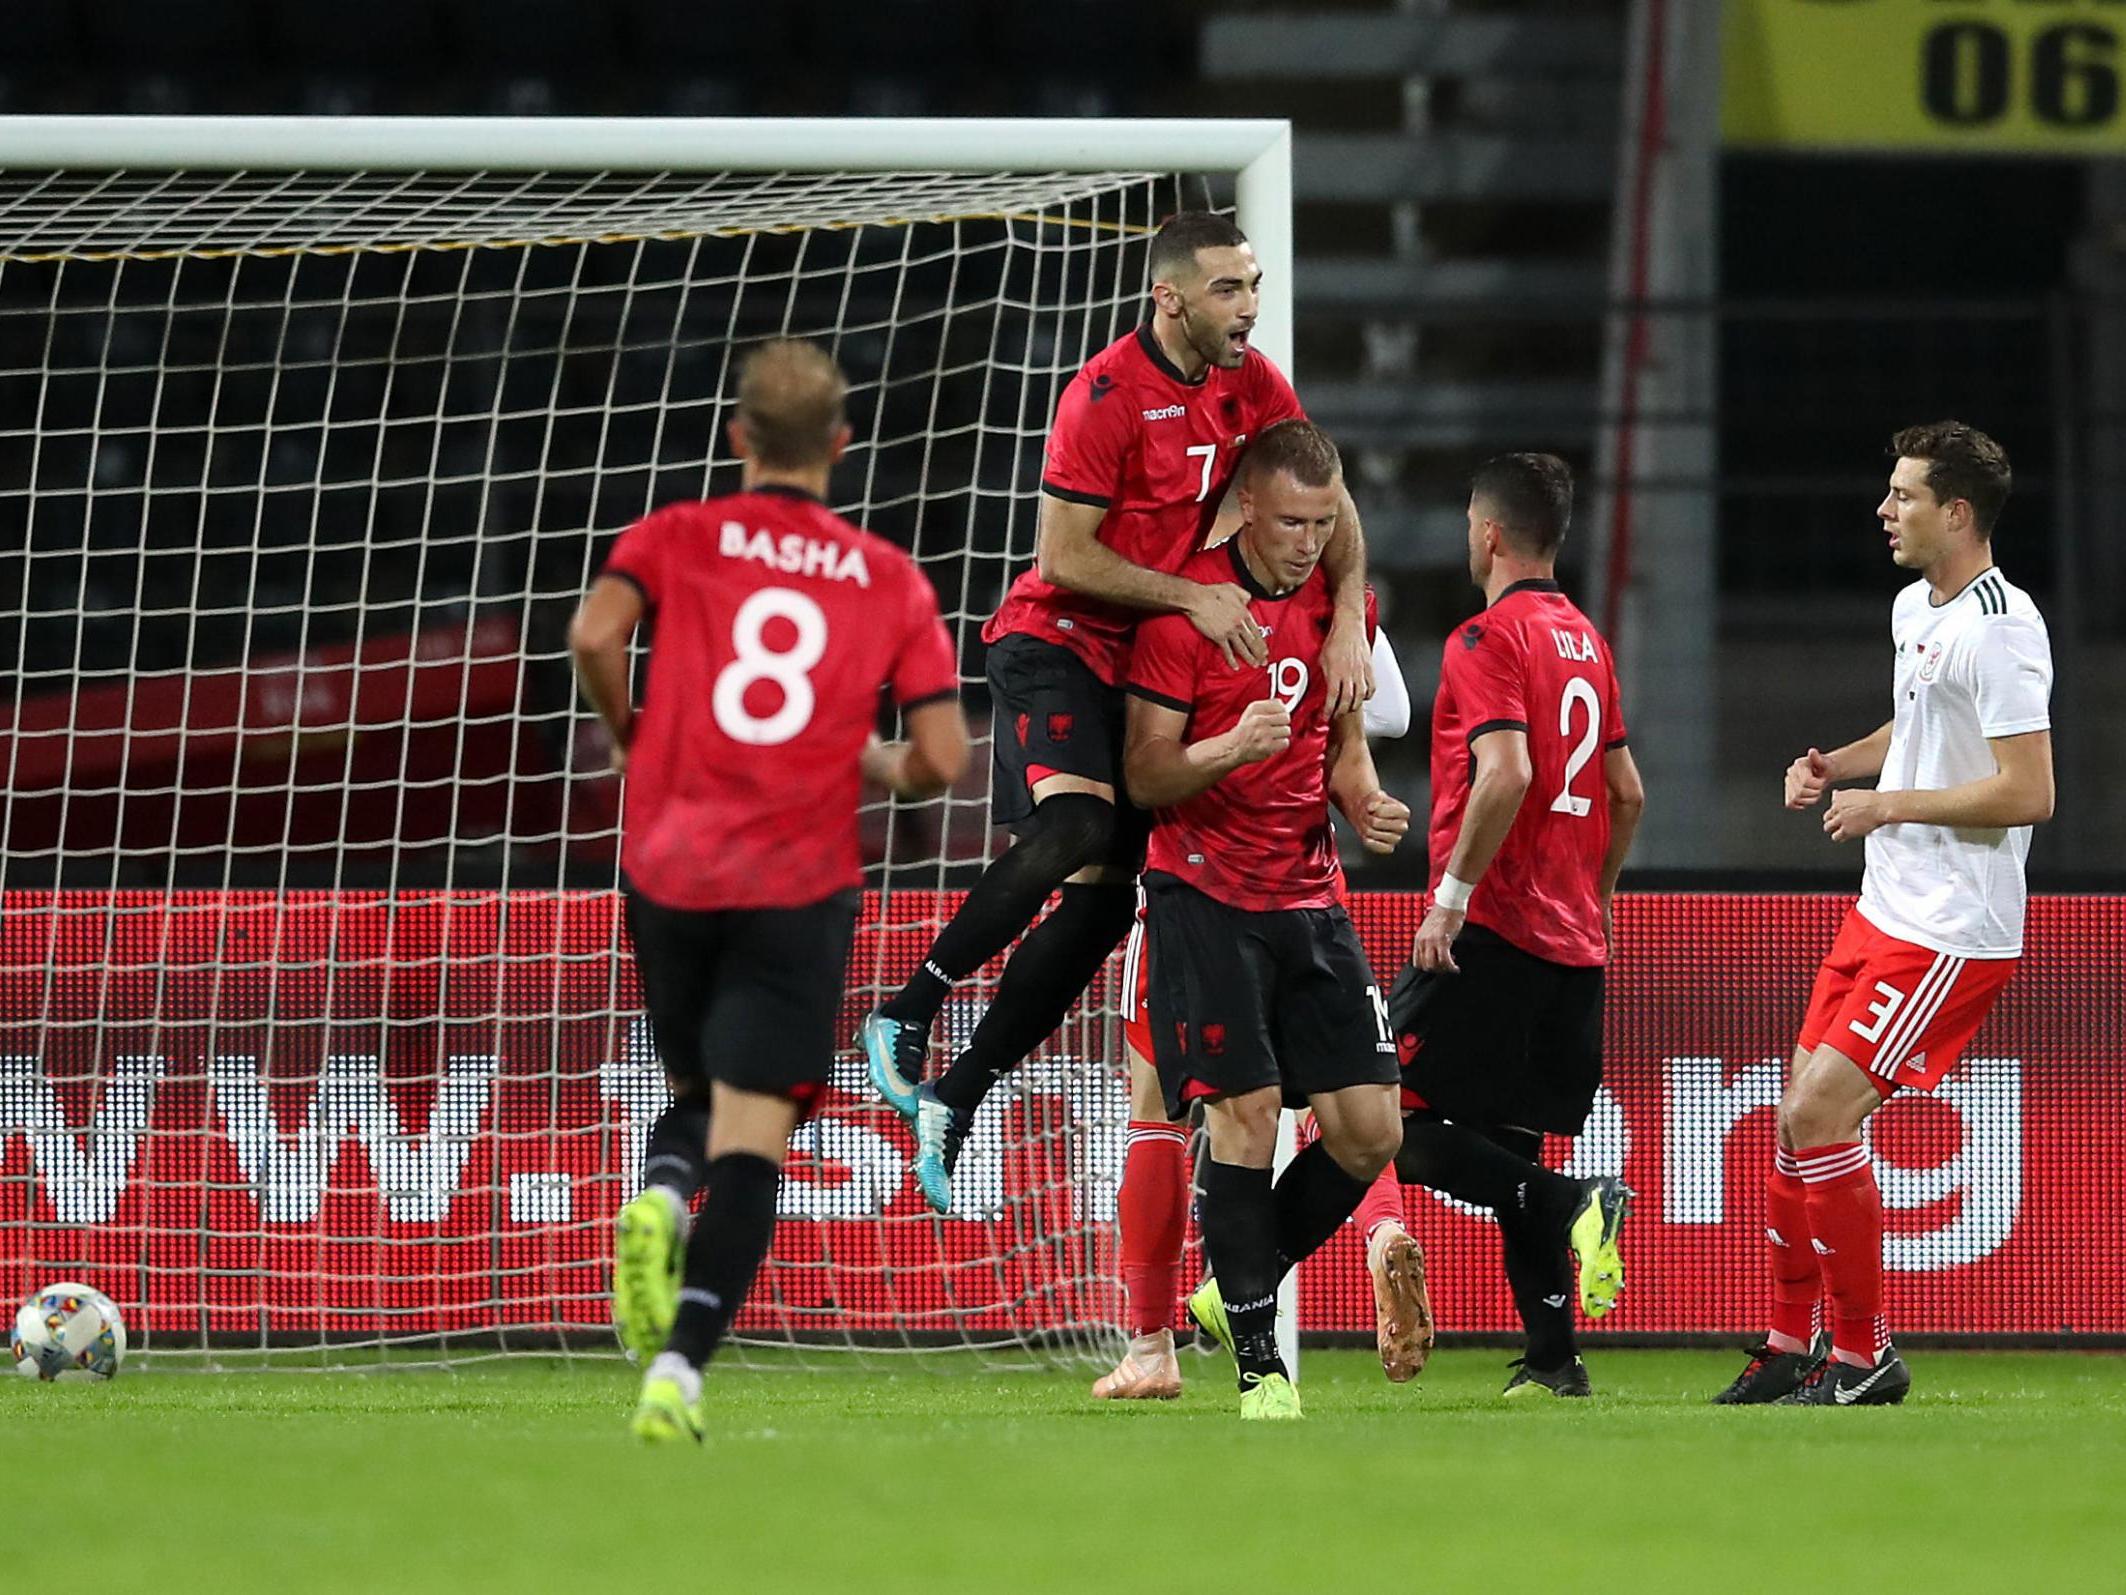 Bekim Balaj celebrates scoring the winning goal for Albania against Wales